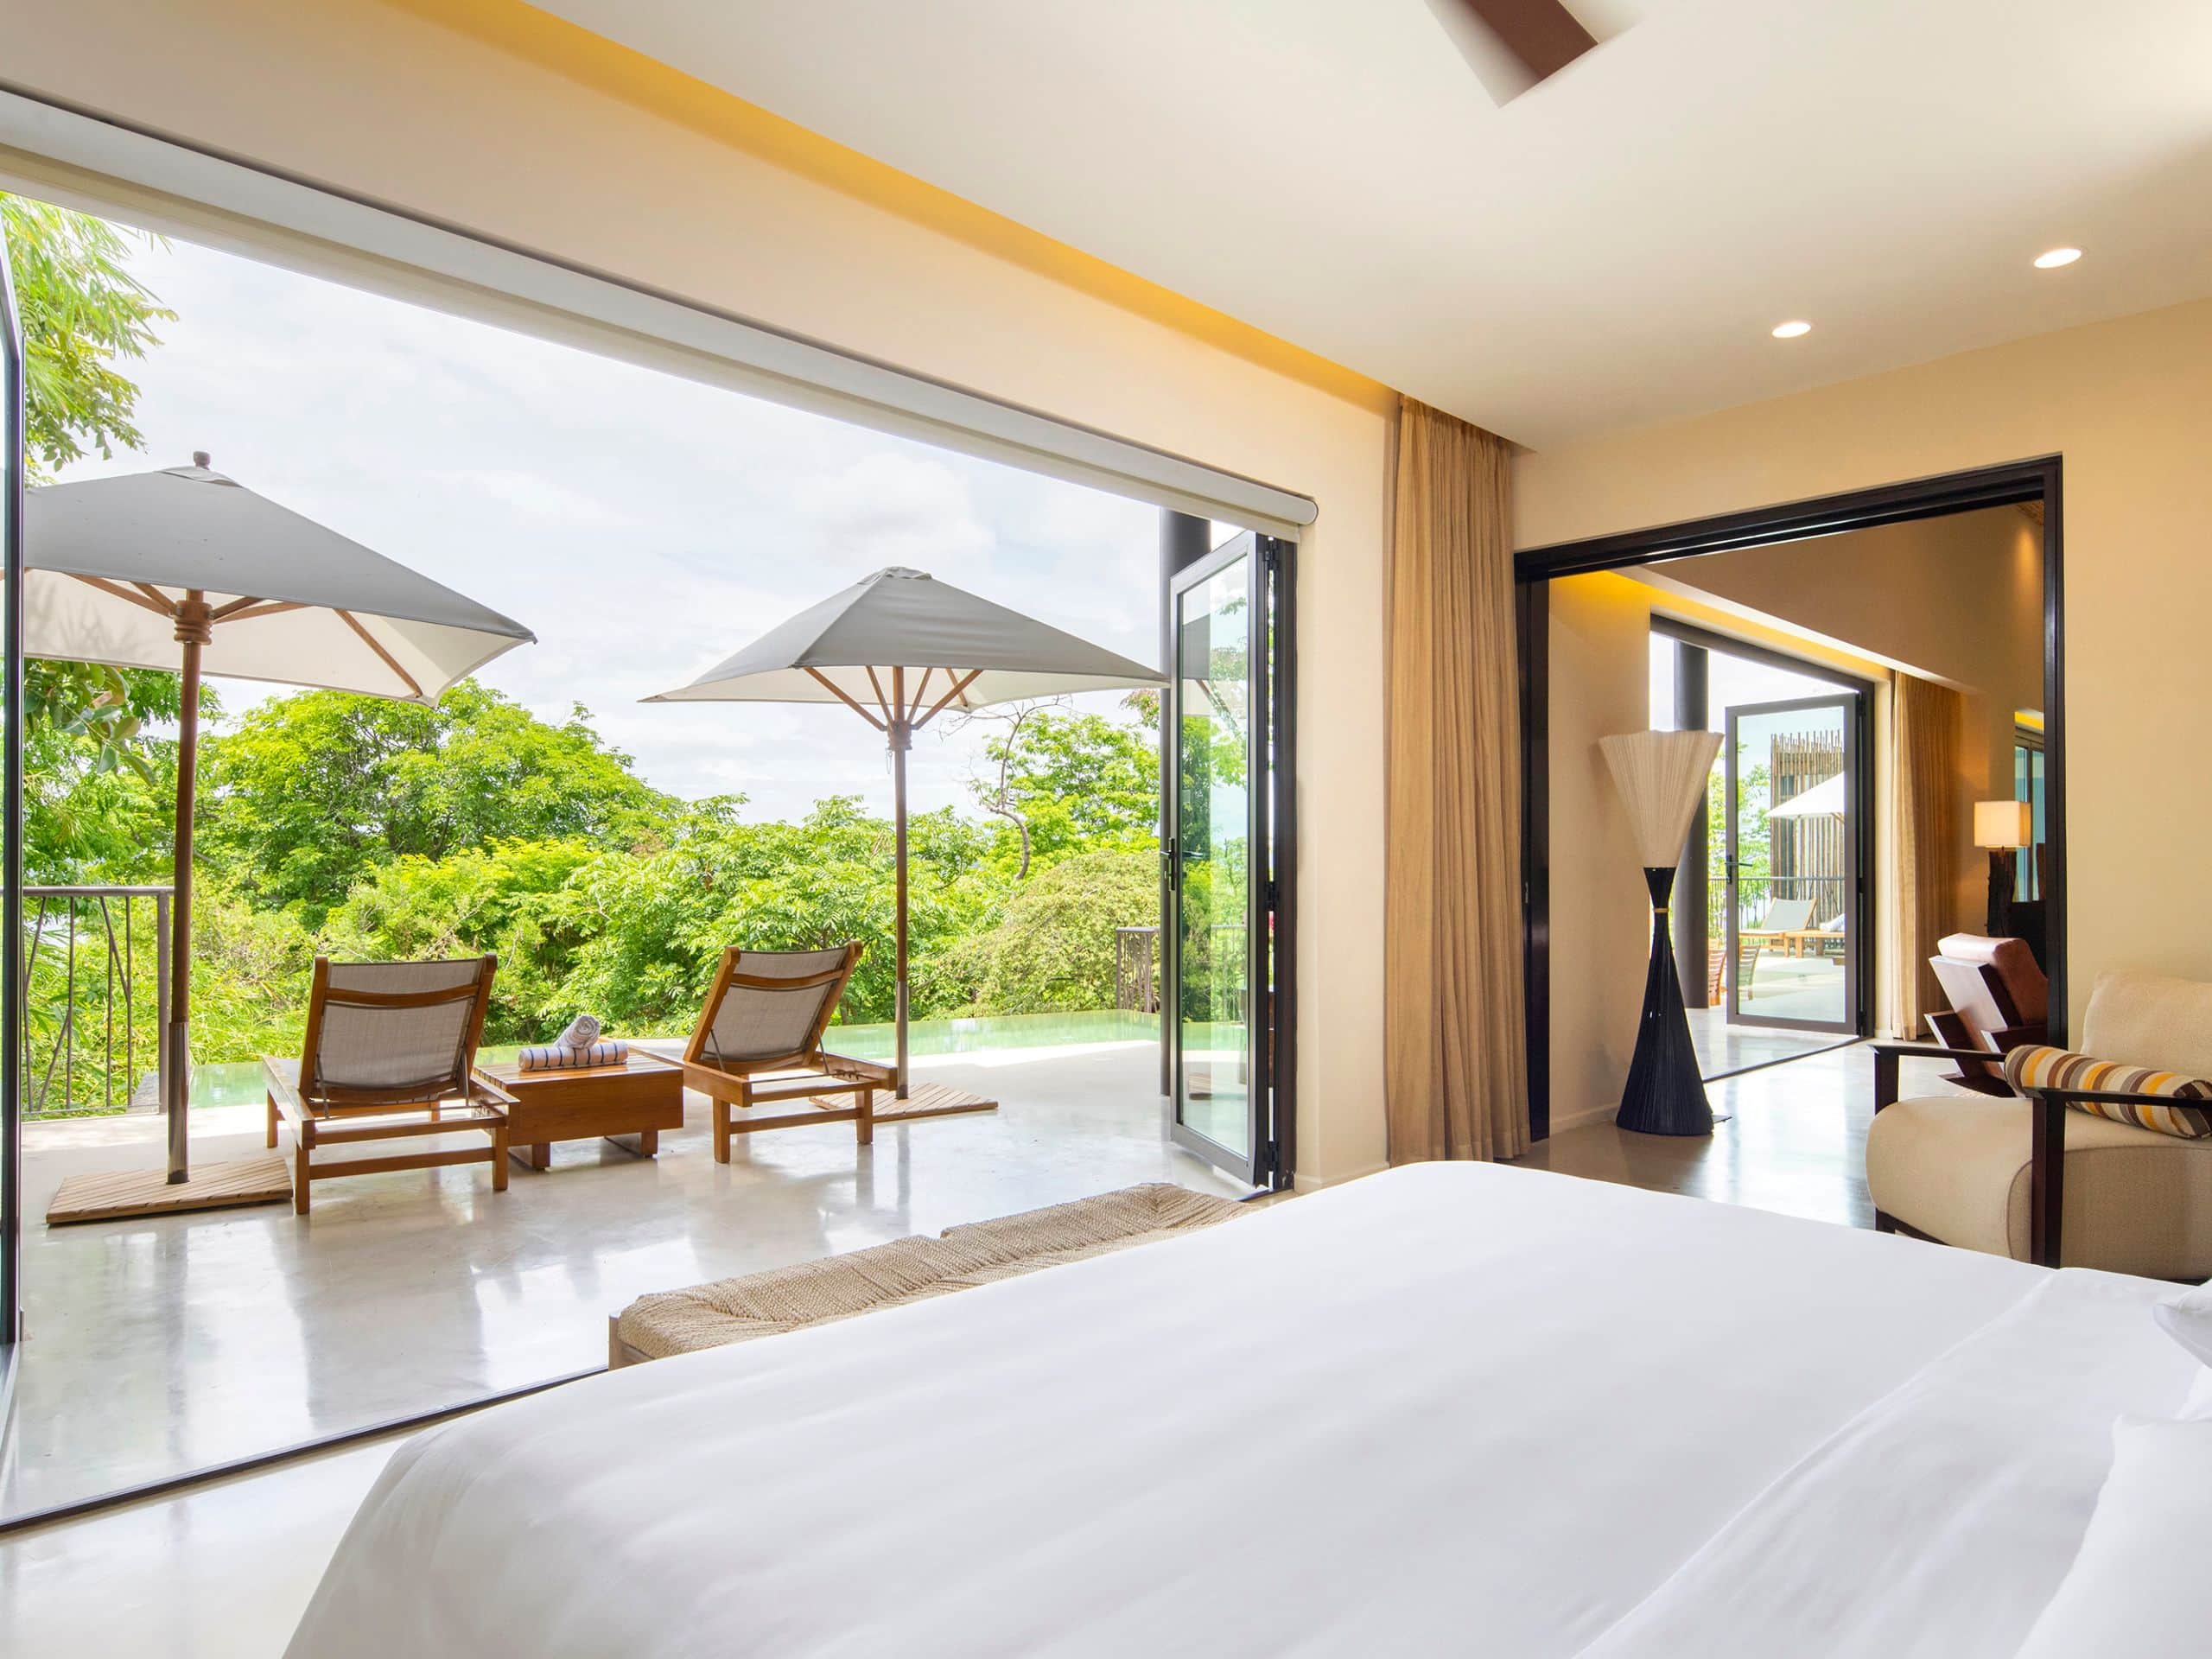 Andaz Costa Rica Resort at Peninsula Papagayo Presidential Suite Bedroom Balcony